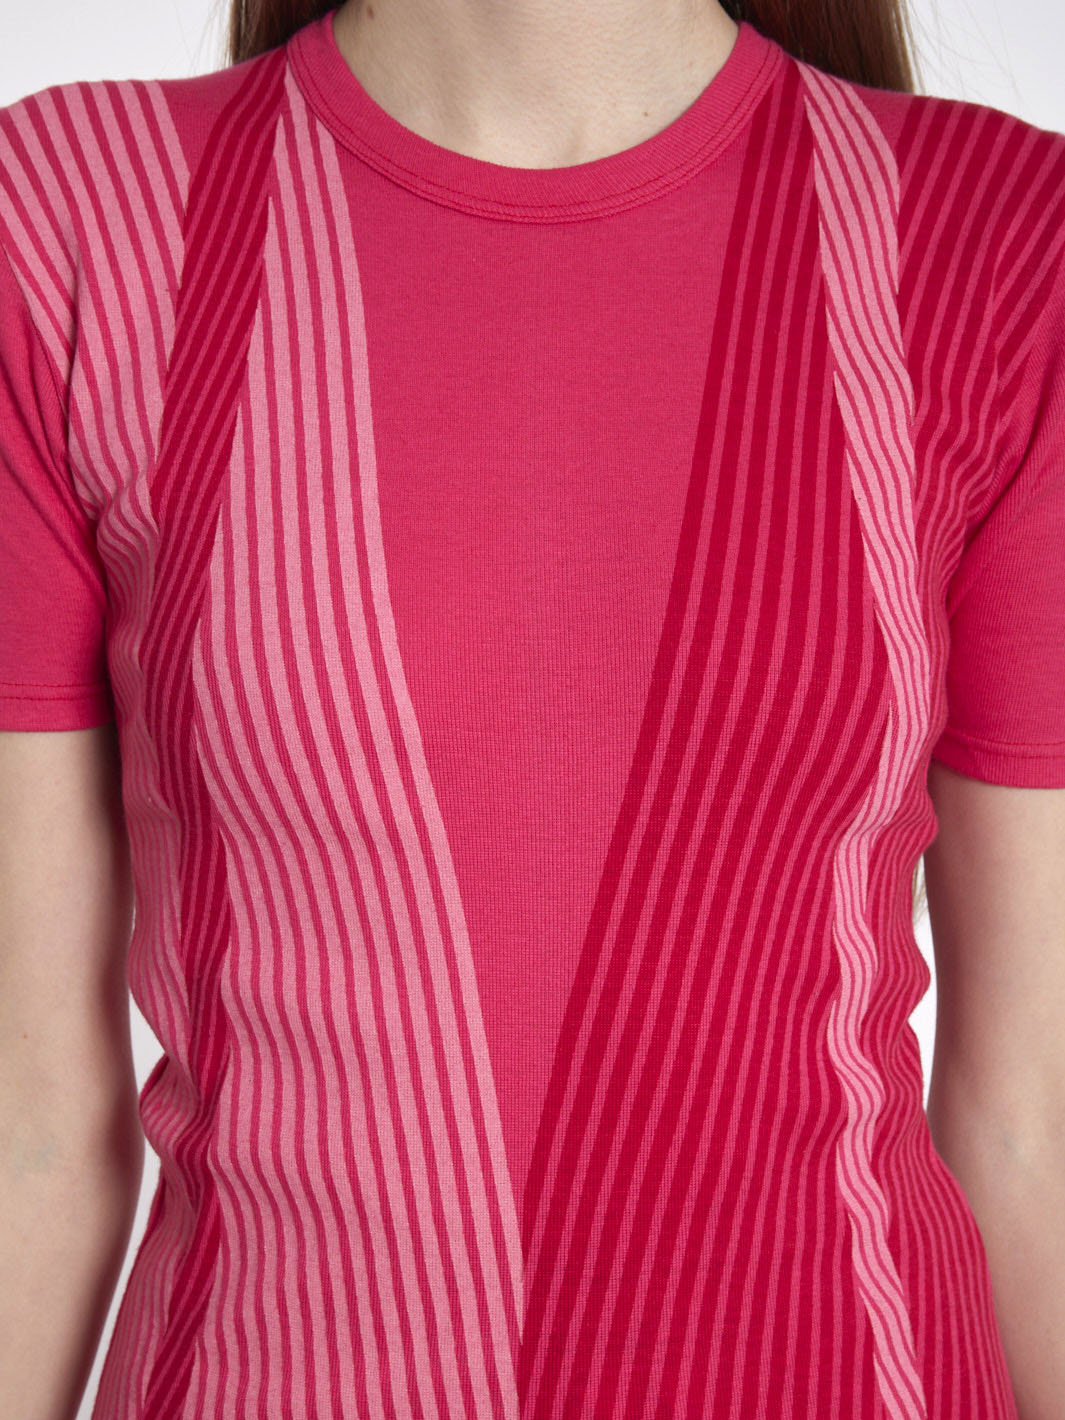 1970s Roberta di Camerino short-sleeved T-shirt in fuchsia stretch cotton